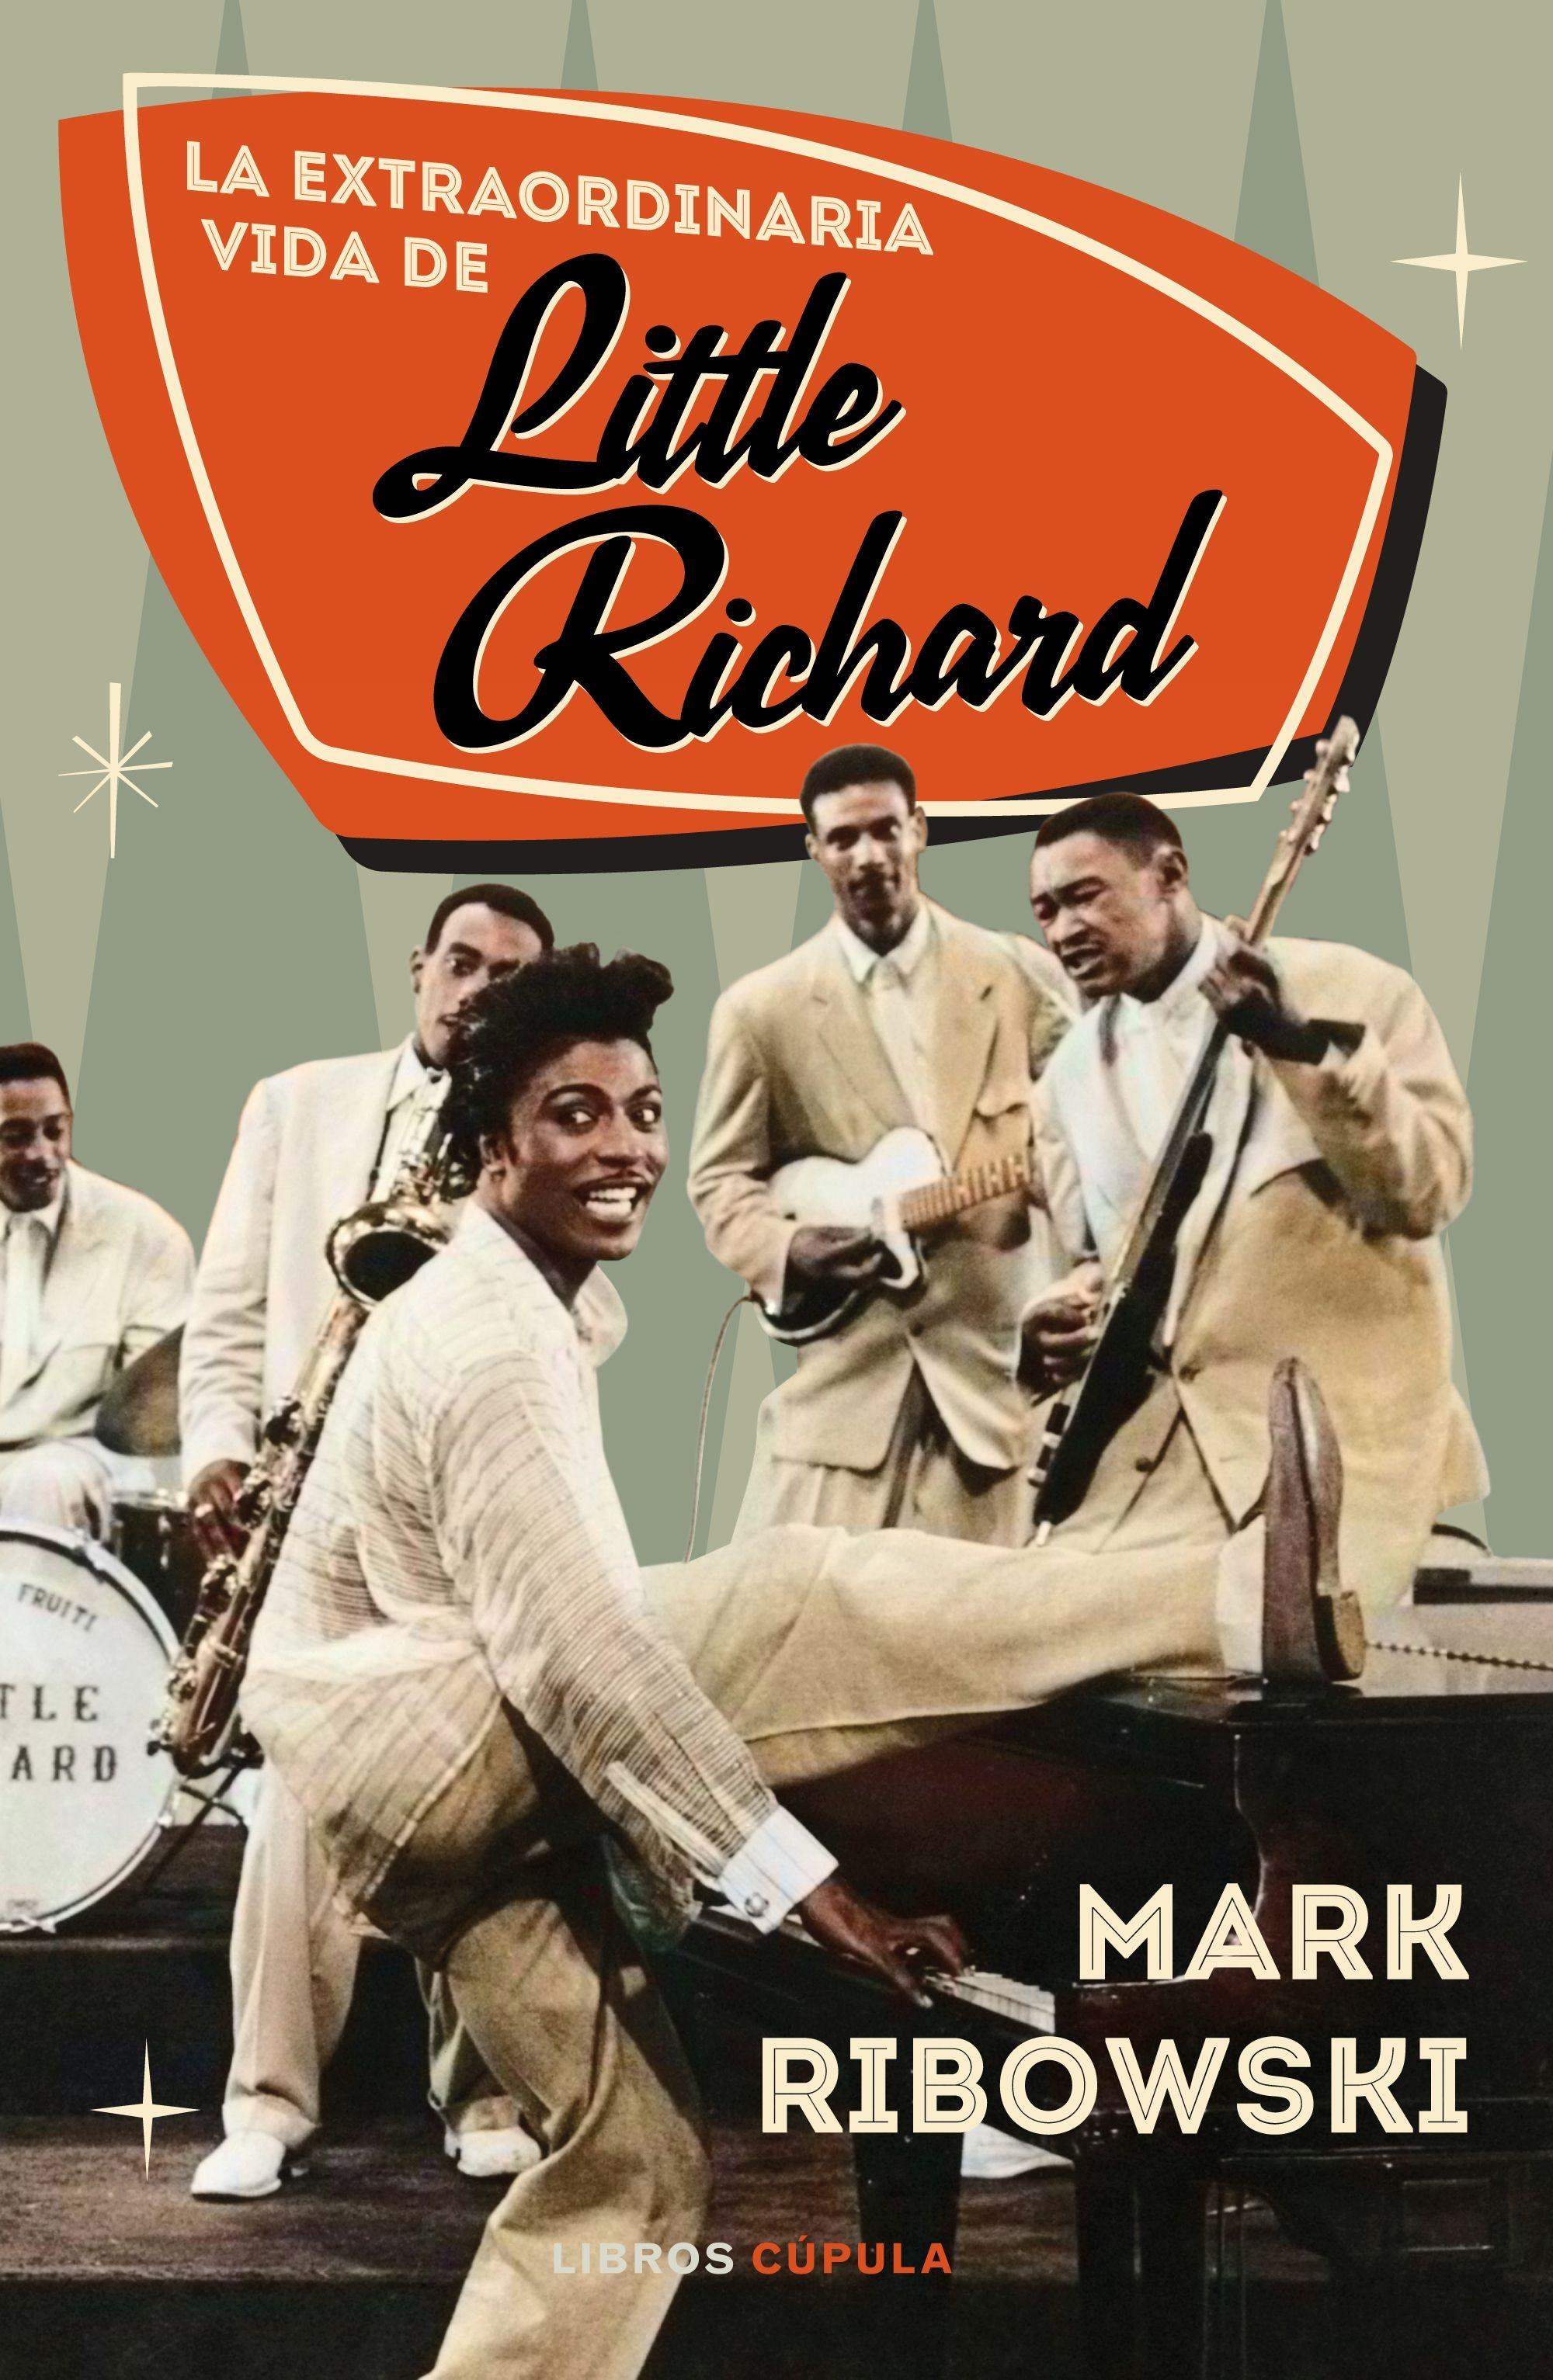 La Extraordinaria Vida de Little Richard. 